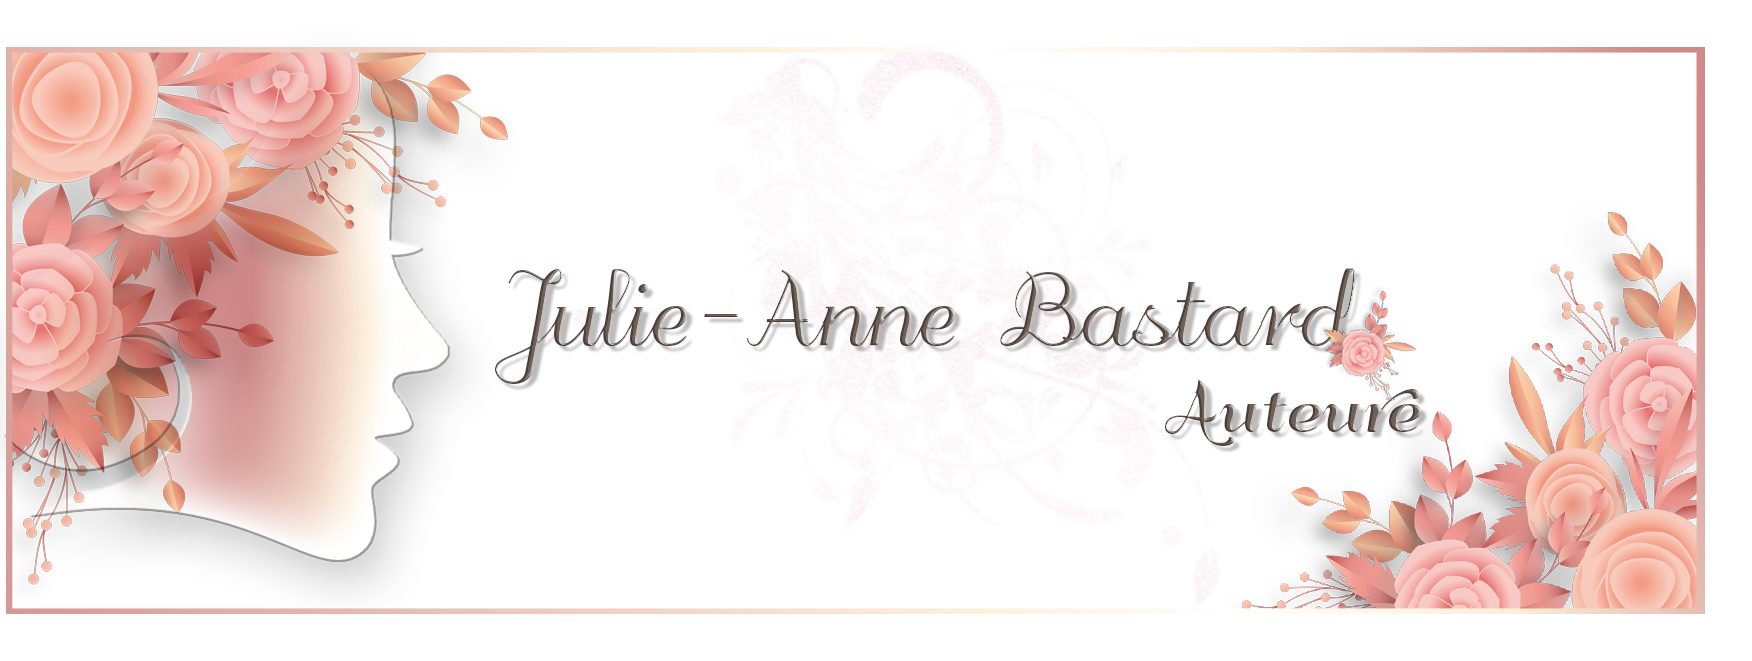 Julie-Anne Bastard auteure